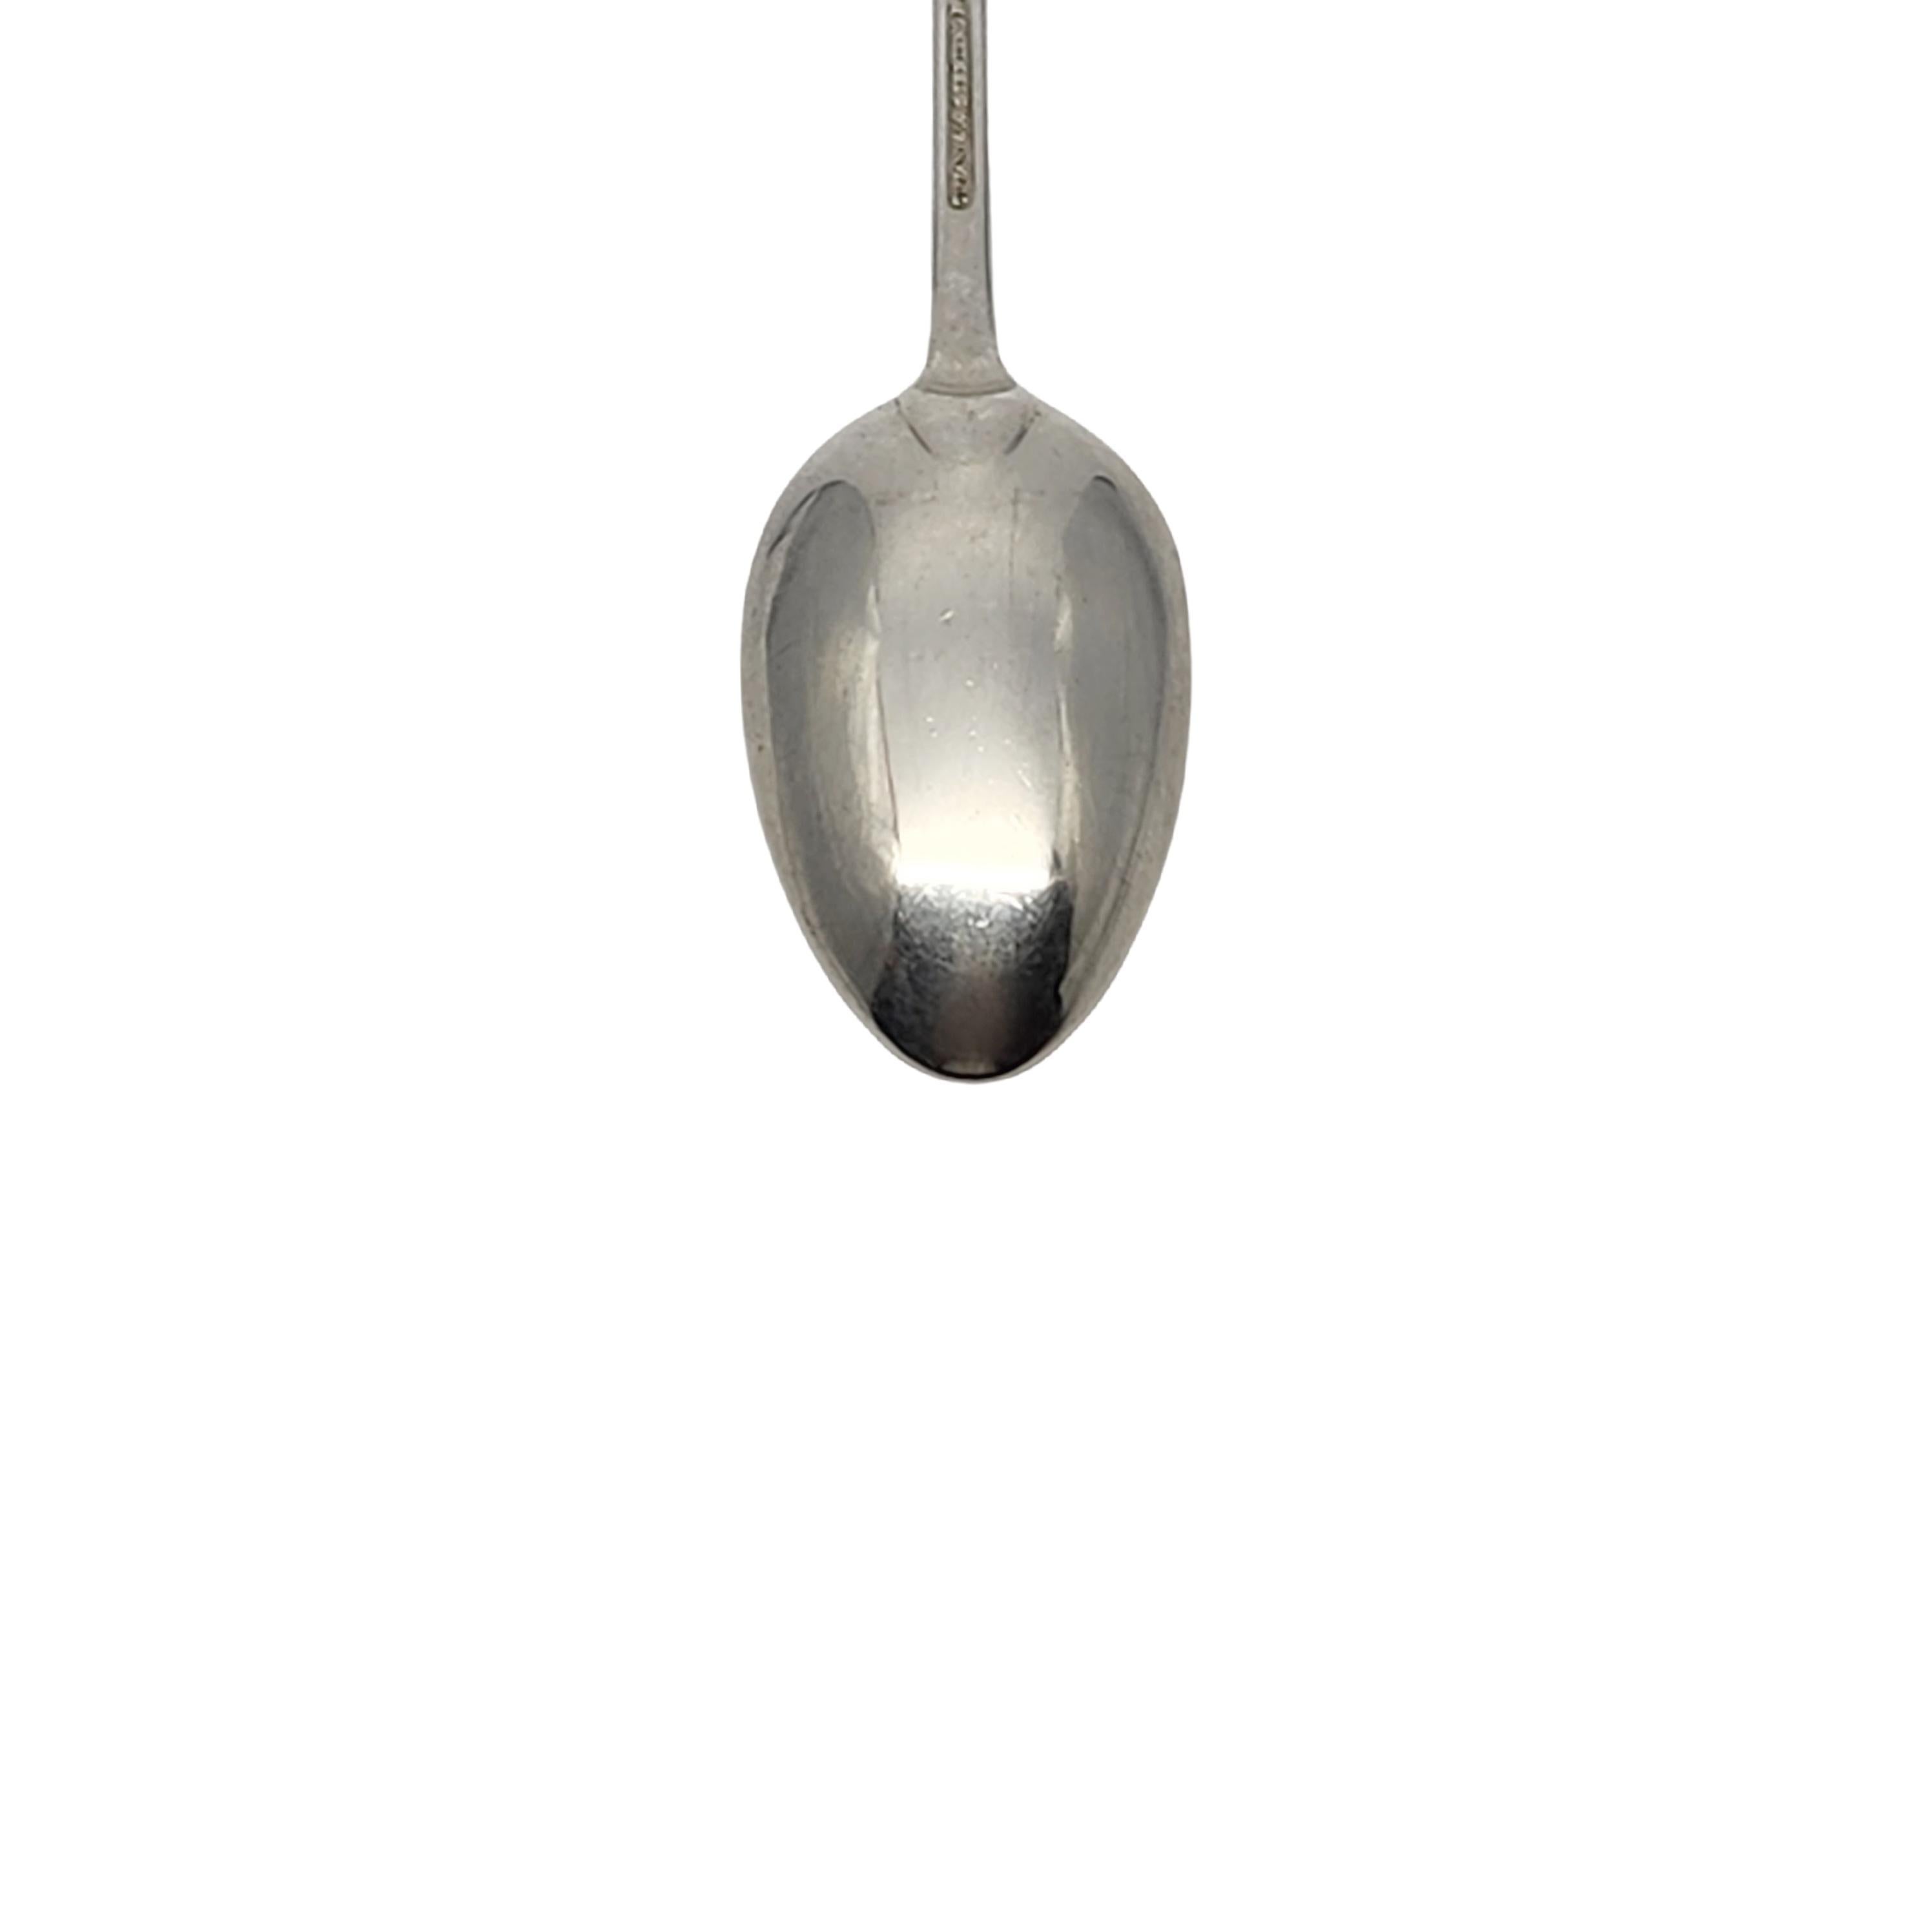 Tiffany & Co Faneuil Sterling Silver Baby Feeding Spoon #15490 3